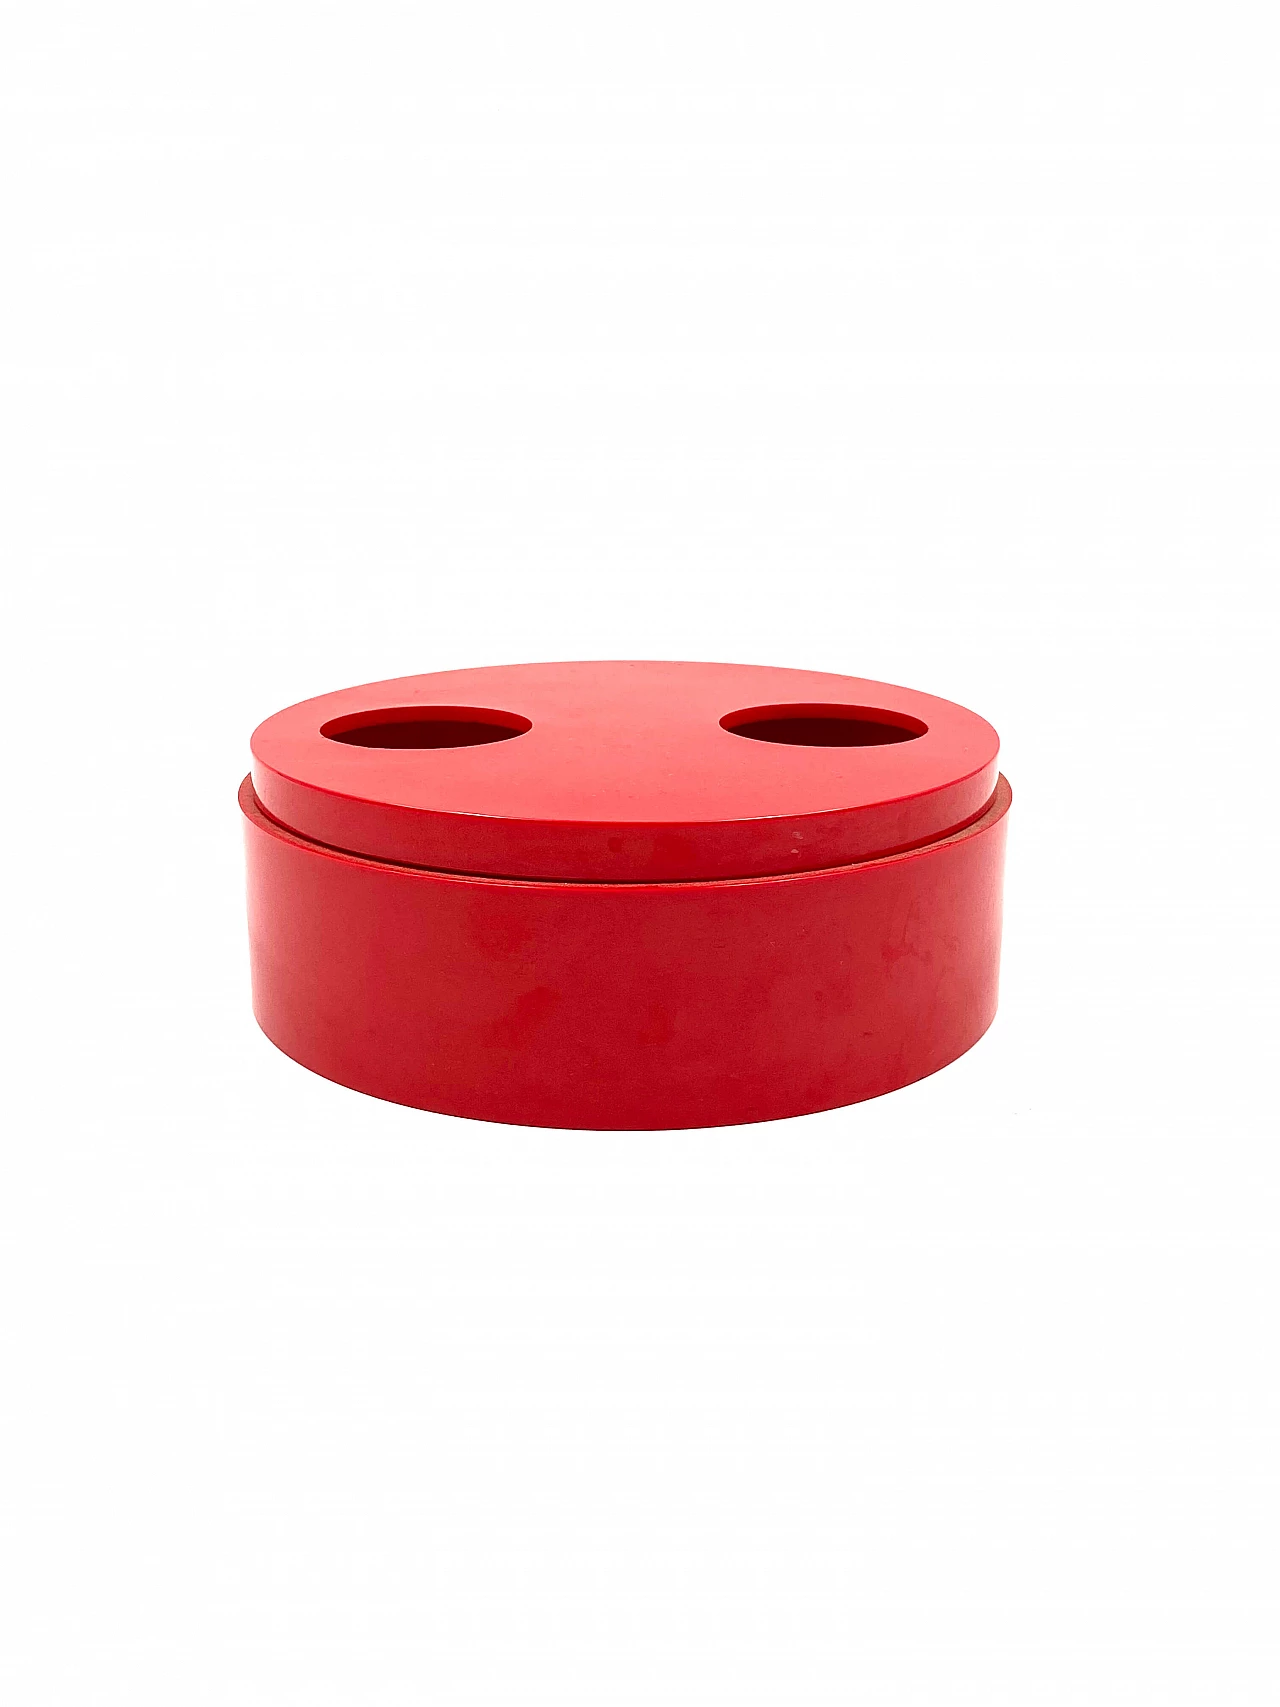 Red ashtray 025 by Sergio Asti for Bilumen, 70's 1153284